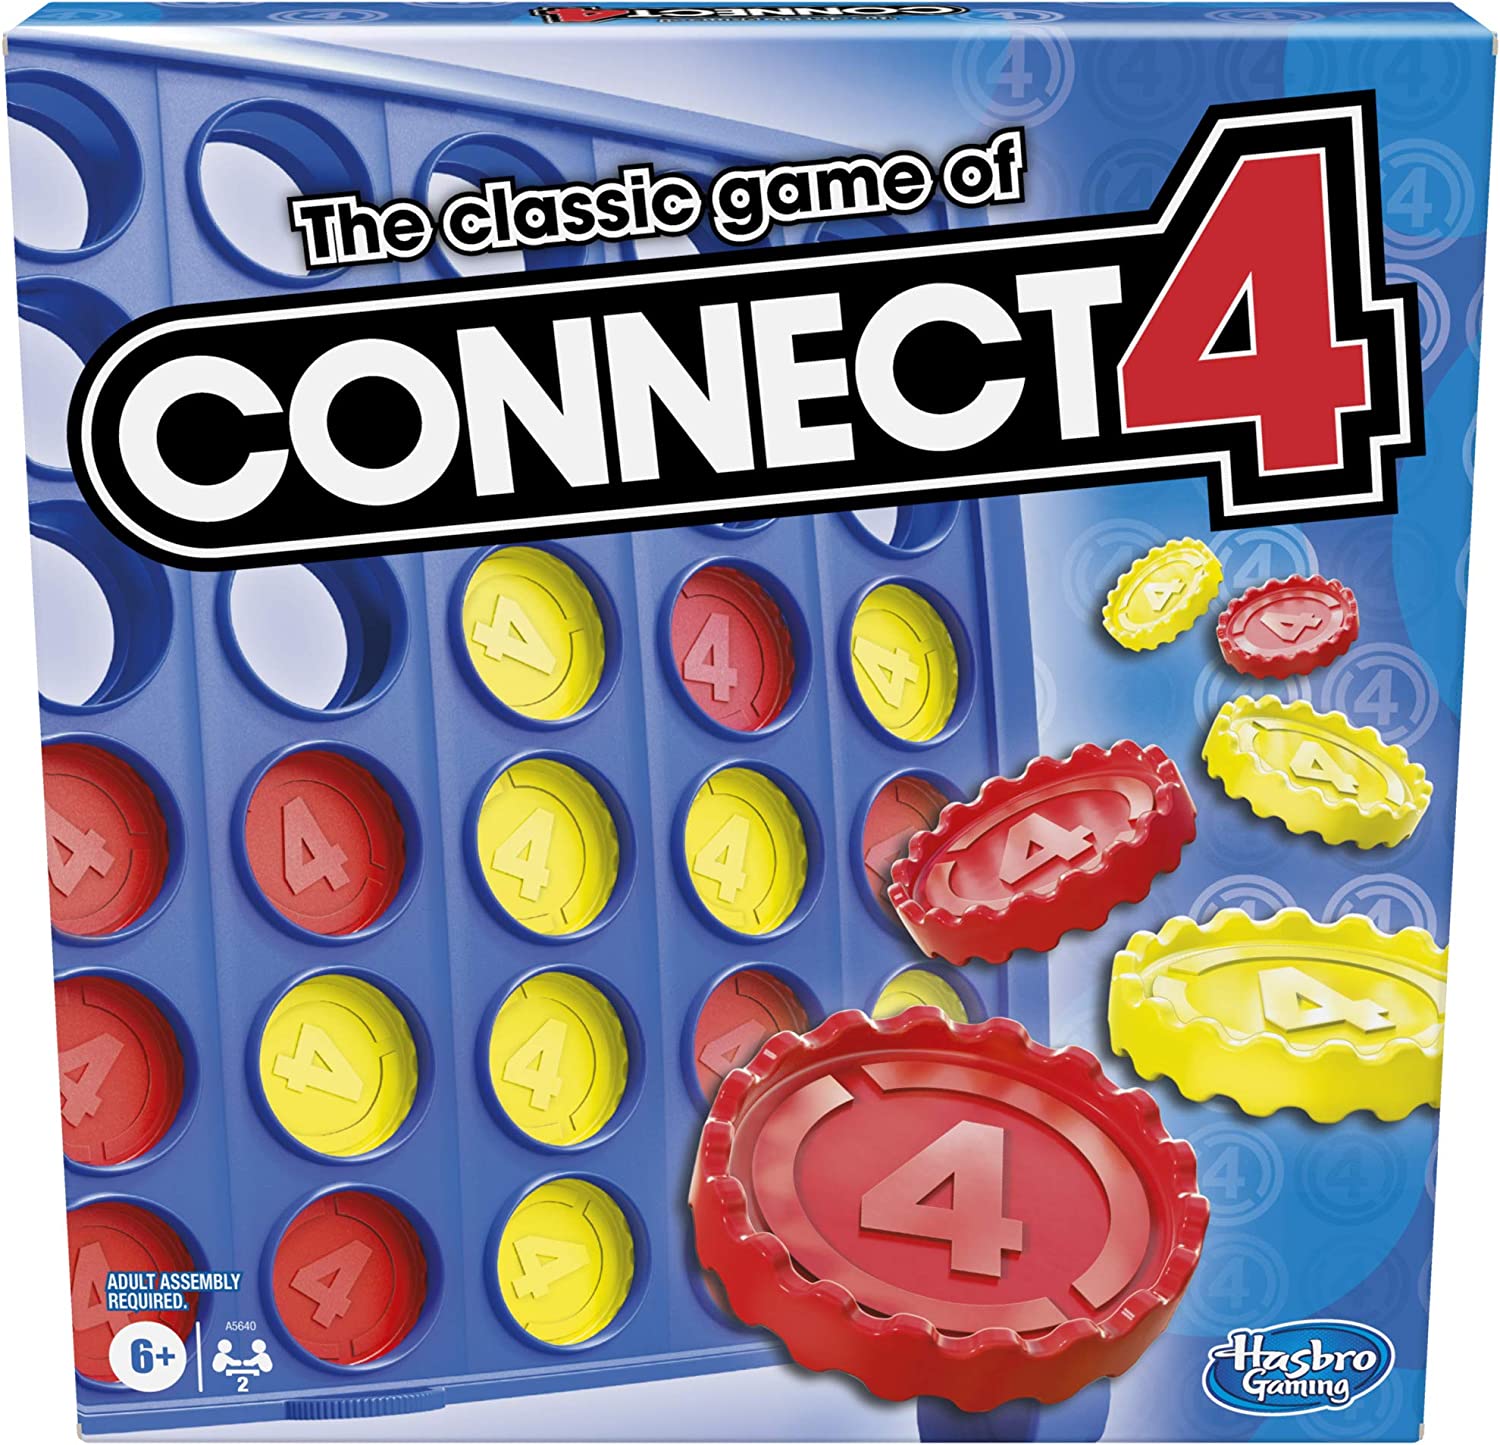 Connect 4 Board Game amazon.com wishlist